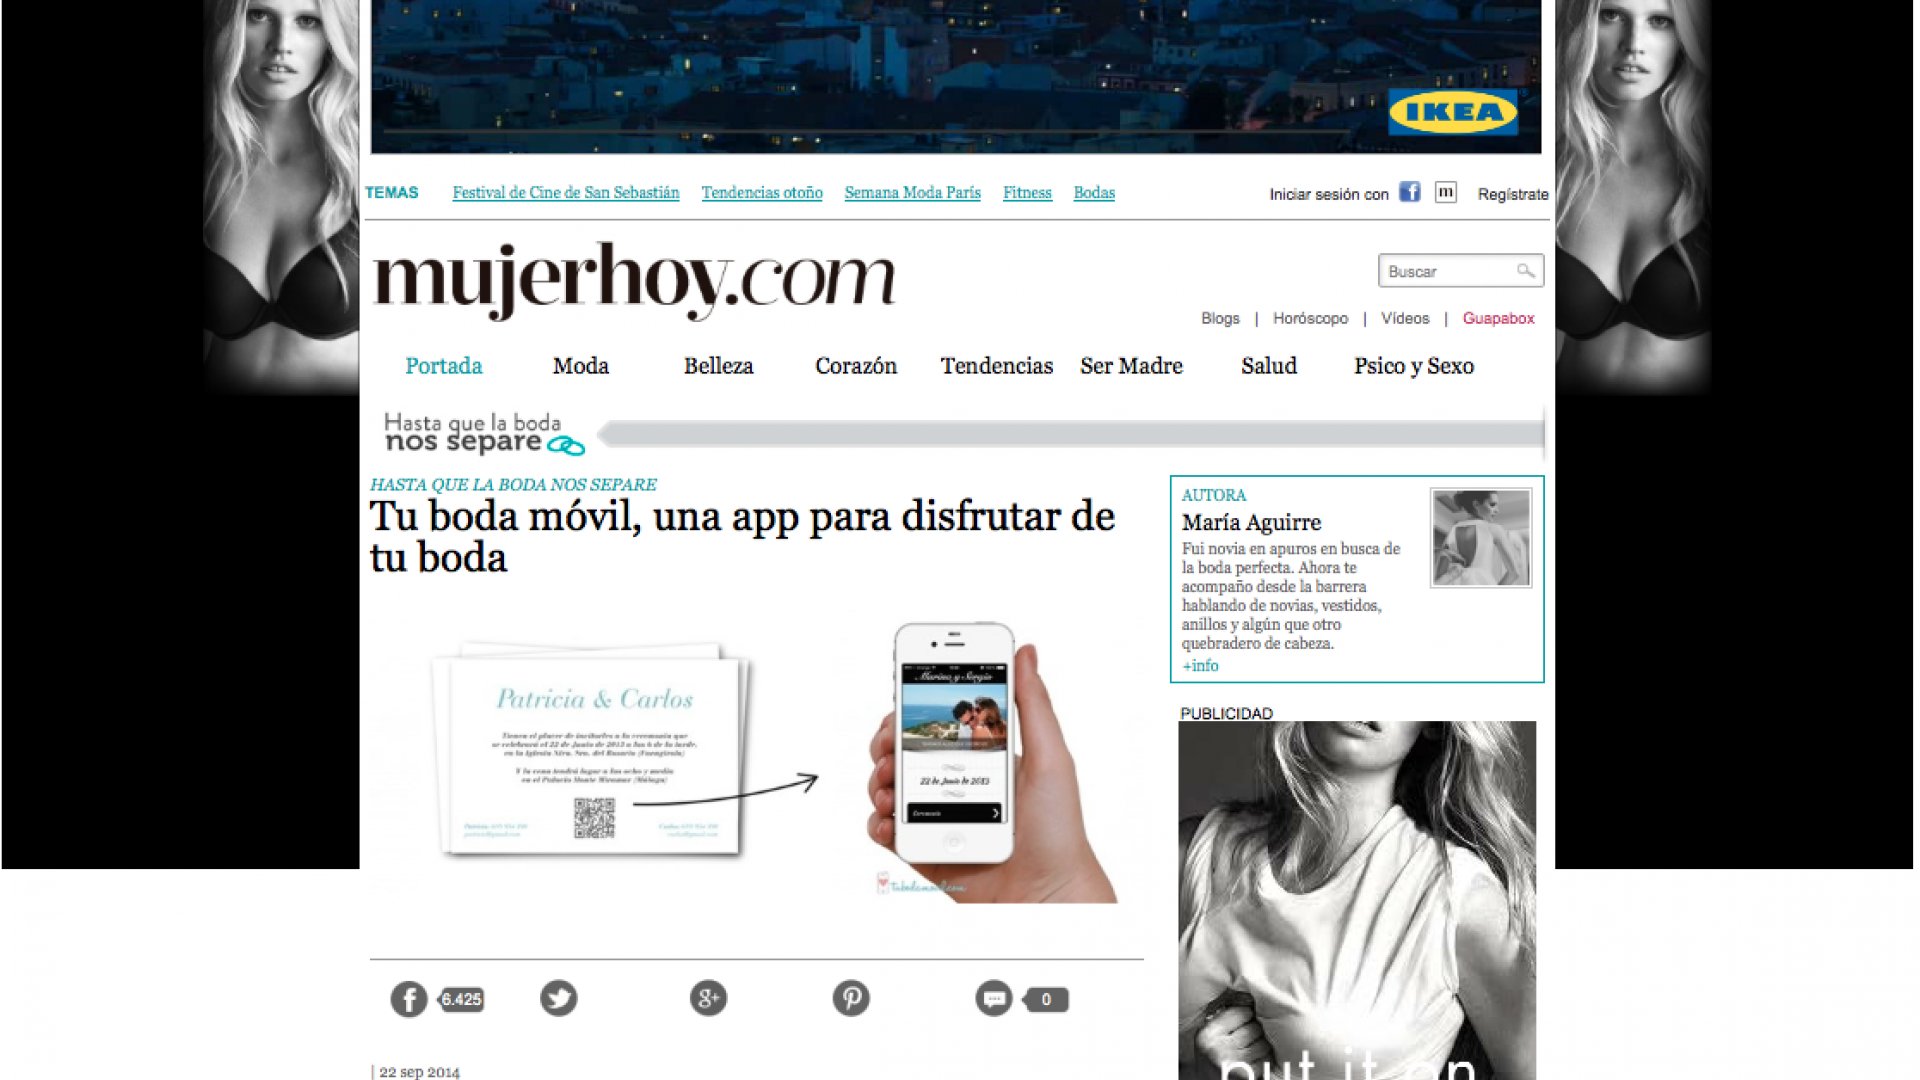 La Revista MujerHoy recomienda Tubodamovil.com